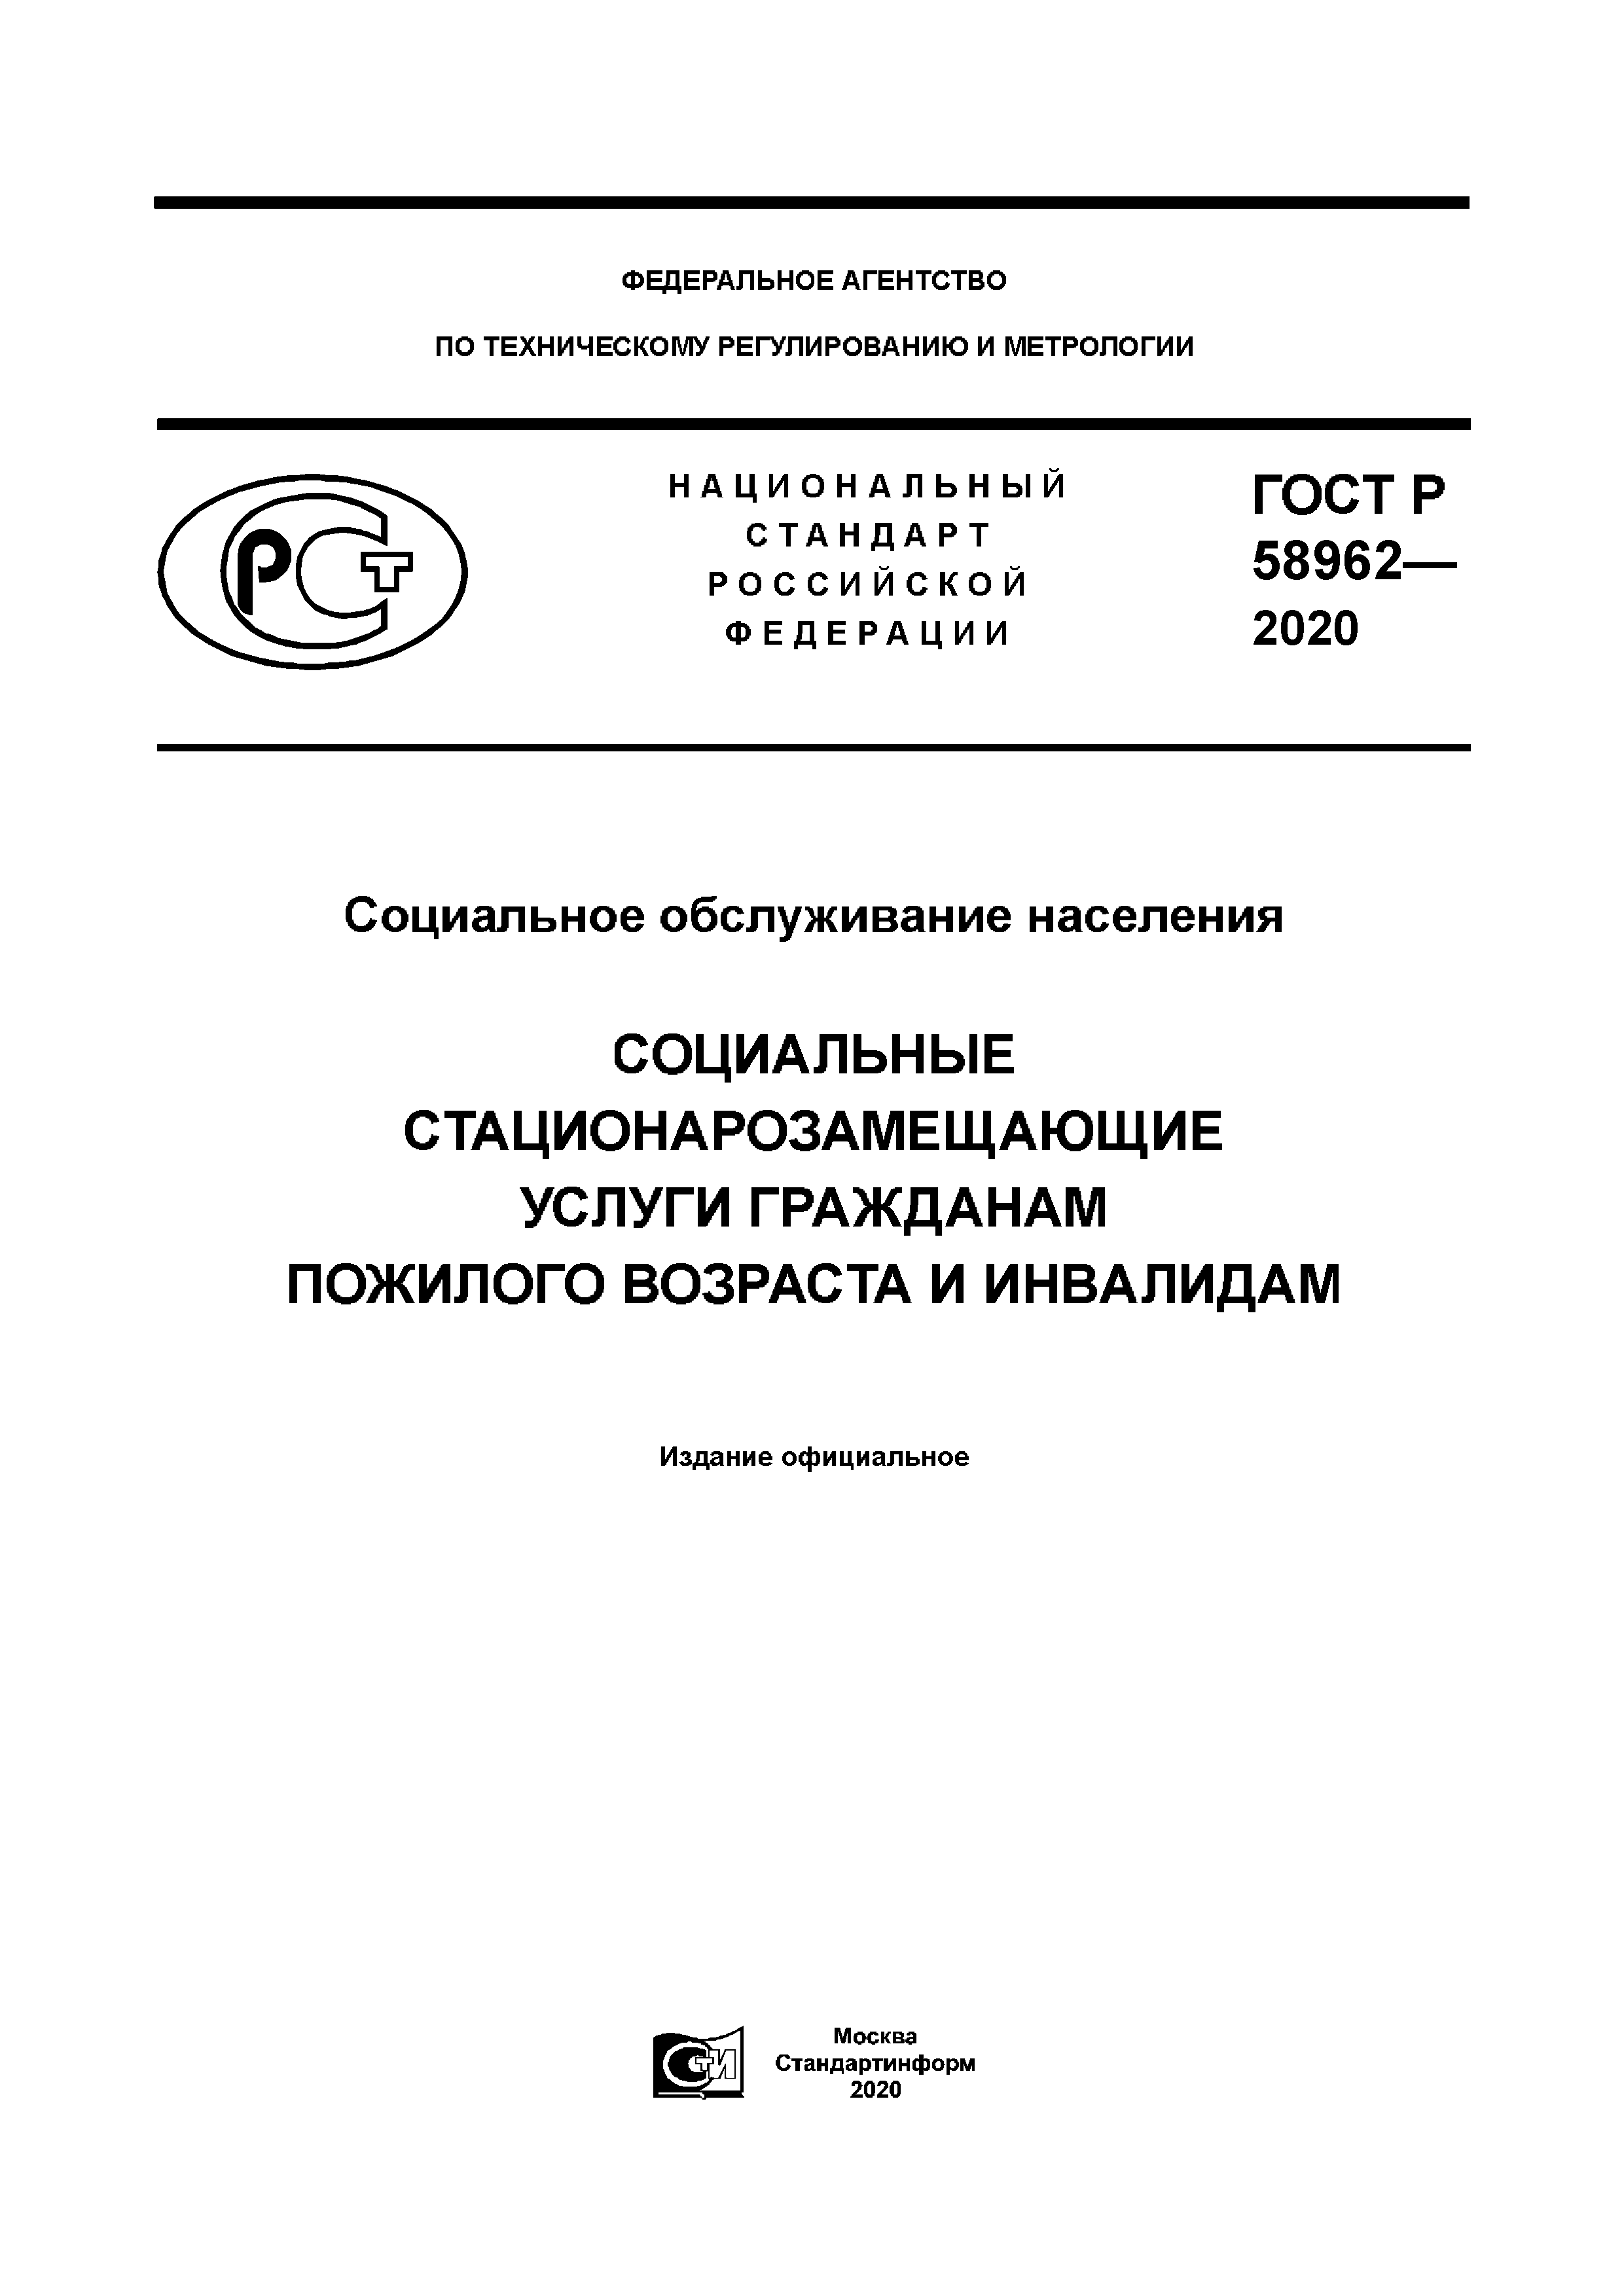 ГОСТ Р 58962-2020